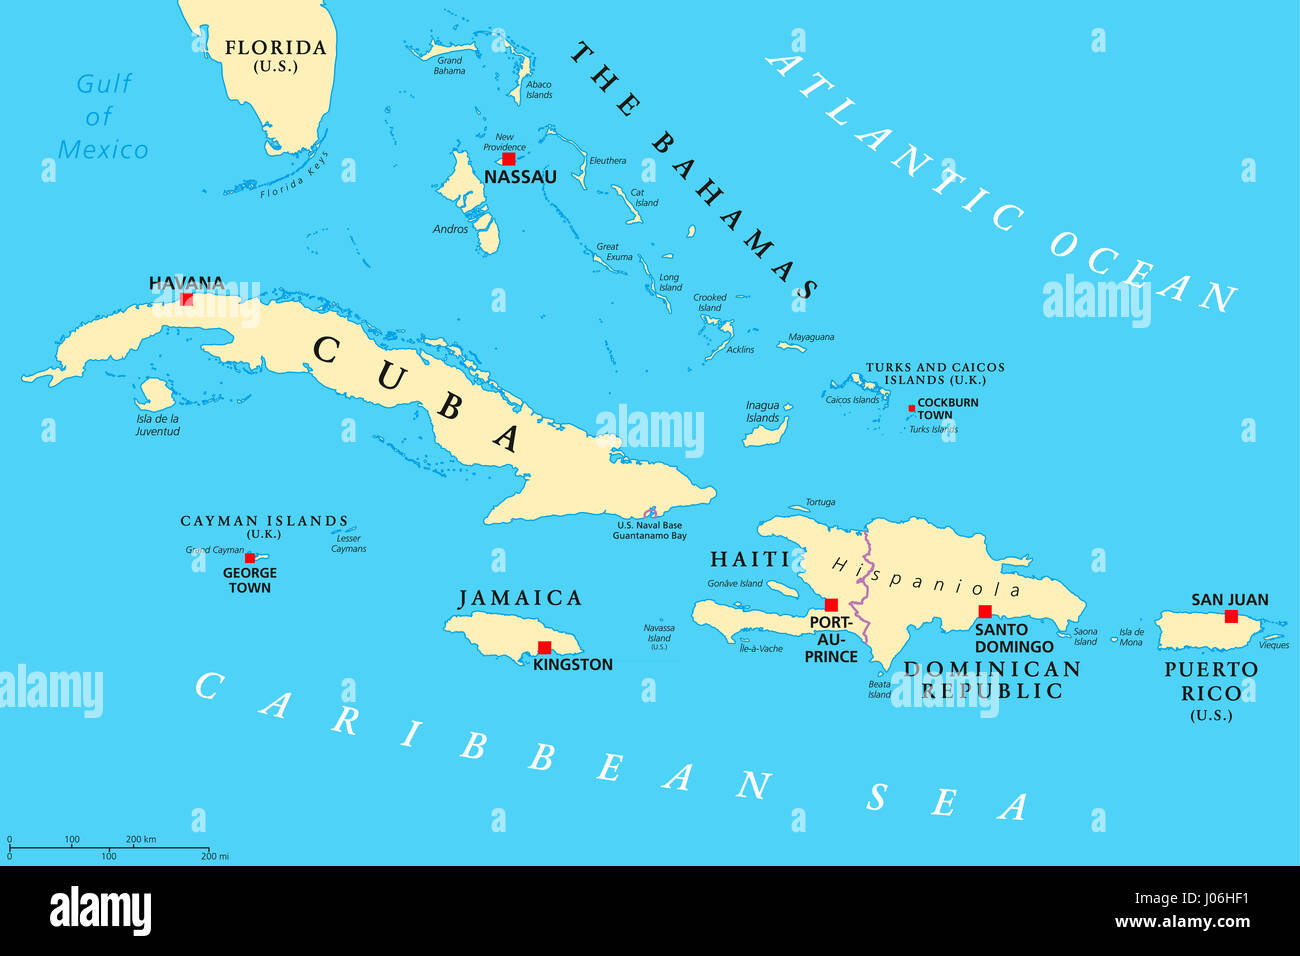 Greater Antilles political map. Caribbean. Cuba, Jamaica, Haiti, Dominican Republic, Puerto Rico, Cayman Islands, The Bahamas, Turks And Caicos Isl. Stock Photo